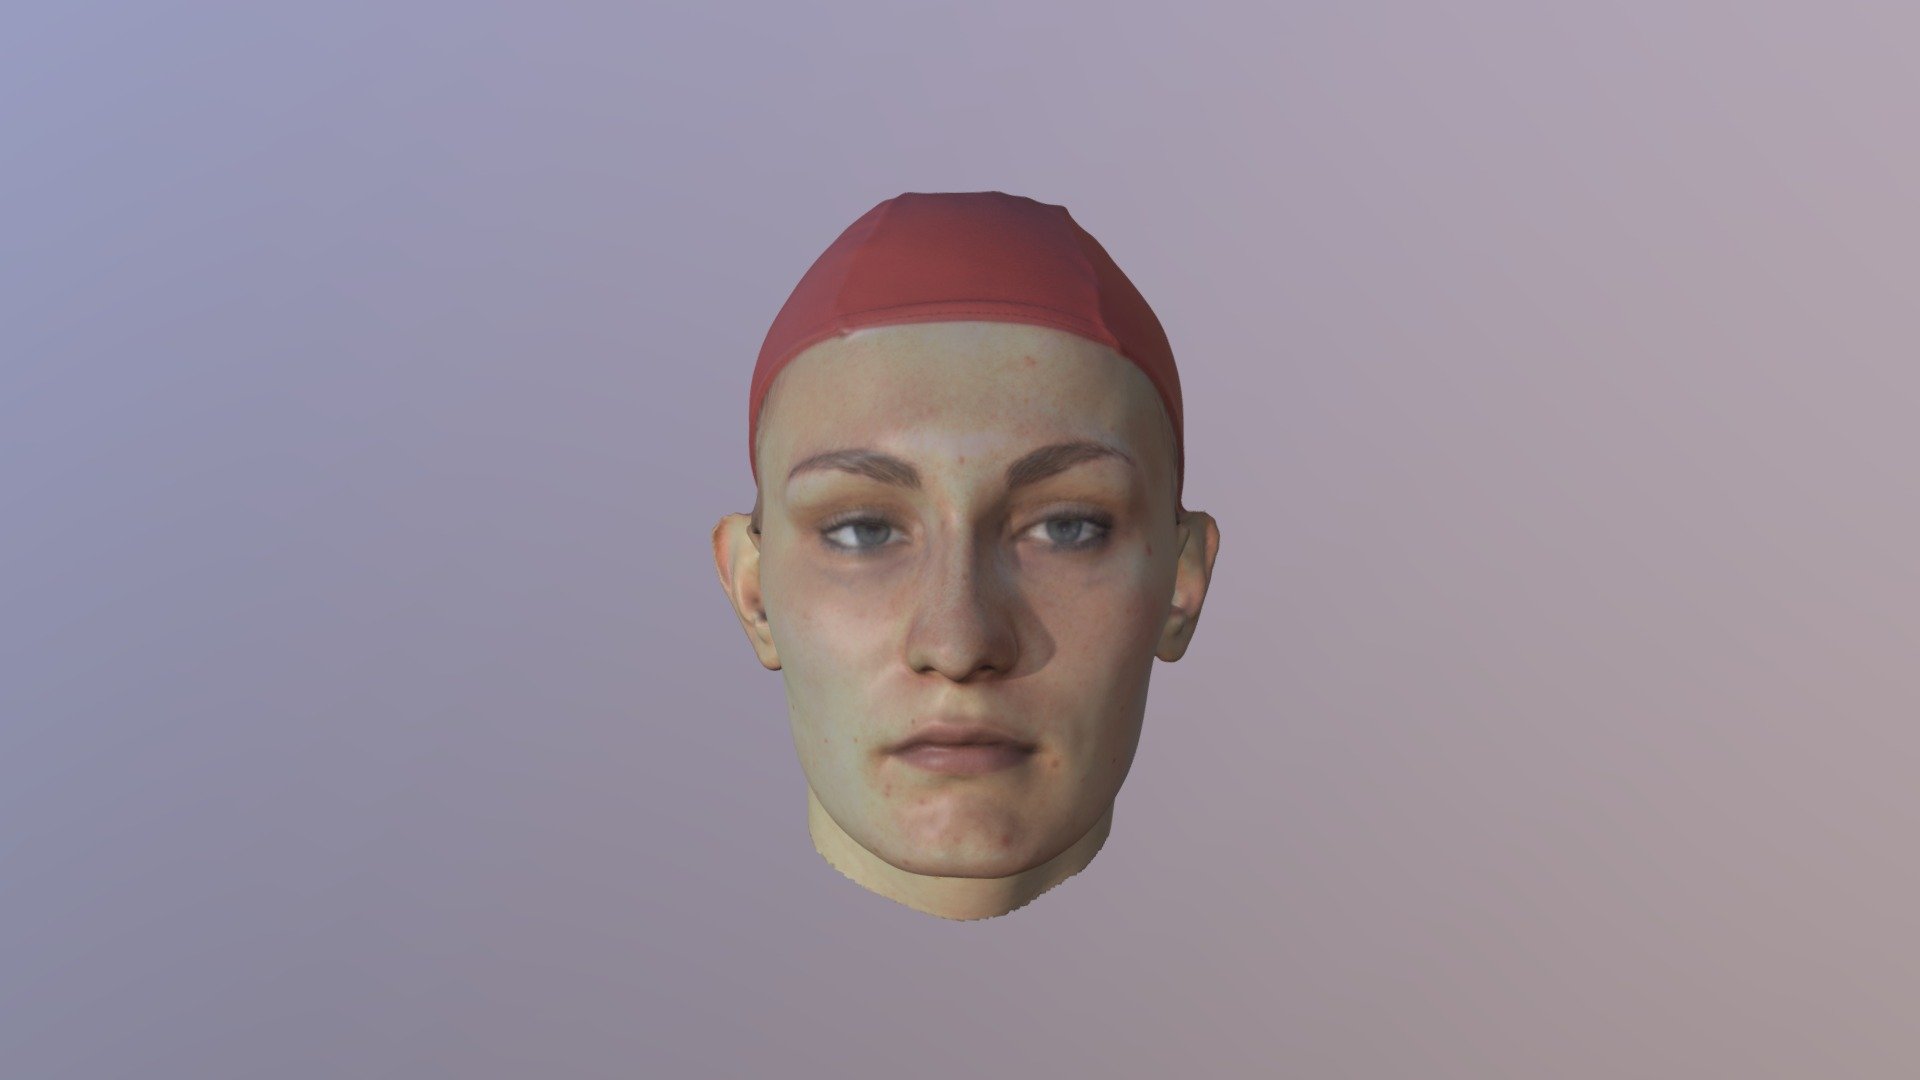 Banta 3D Scan Of Head